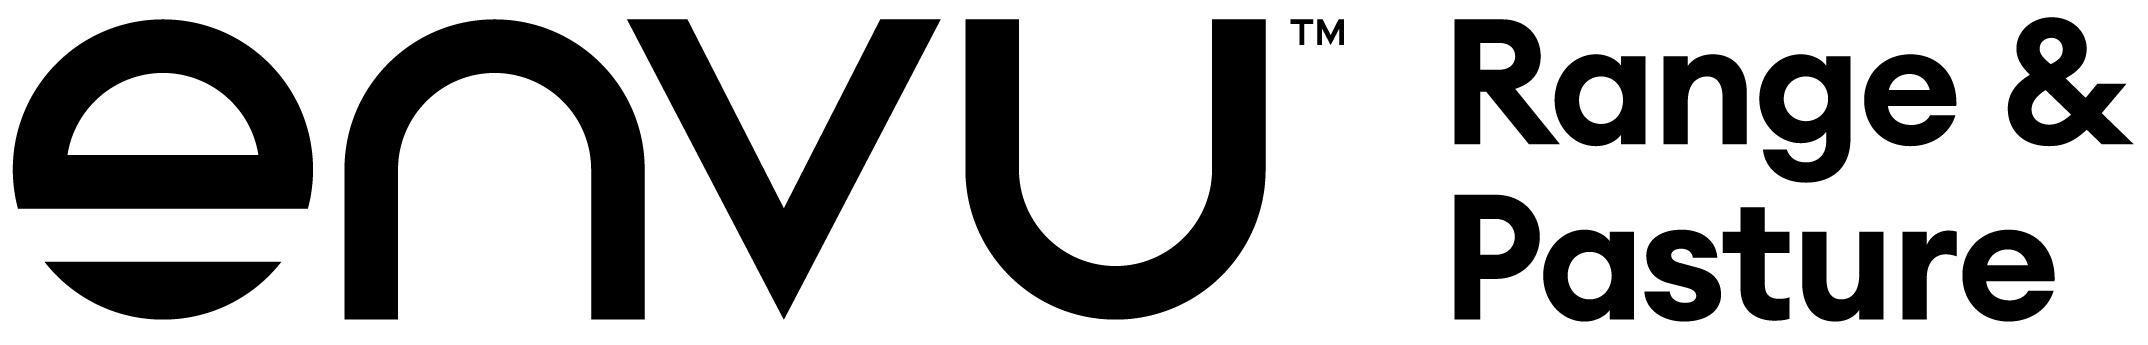 Envu Range & Pasture Logo